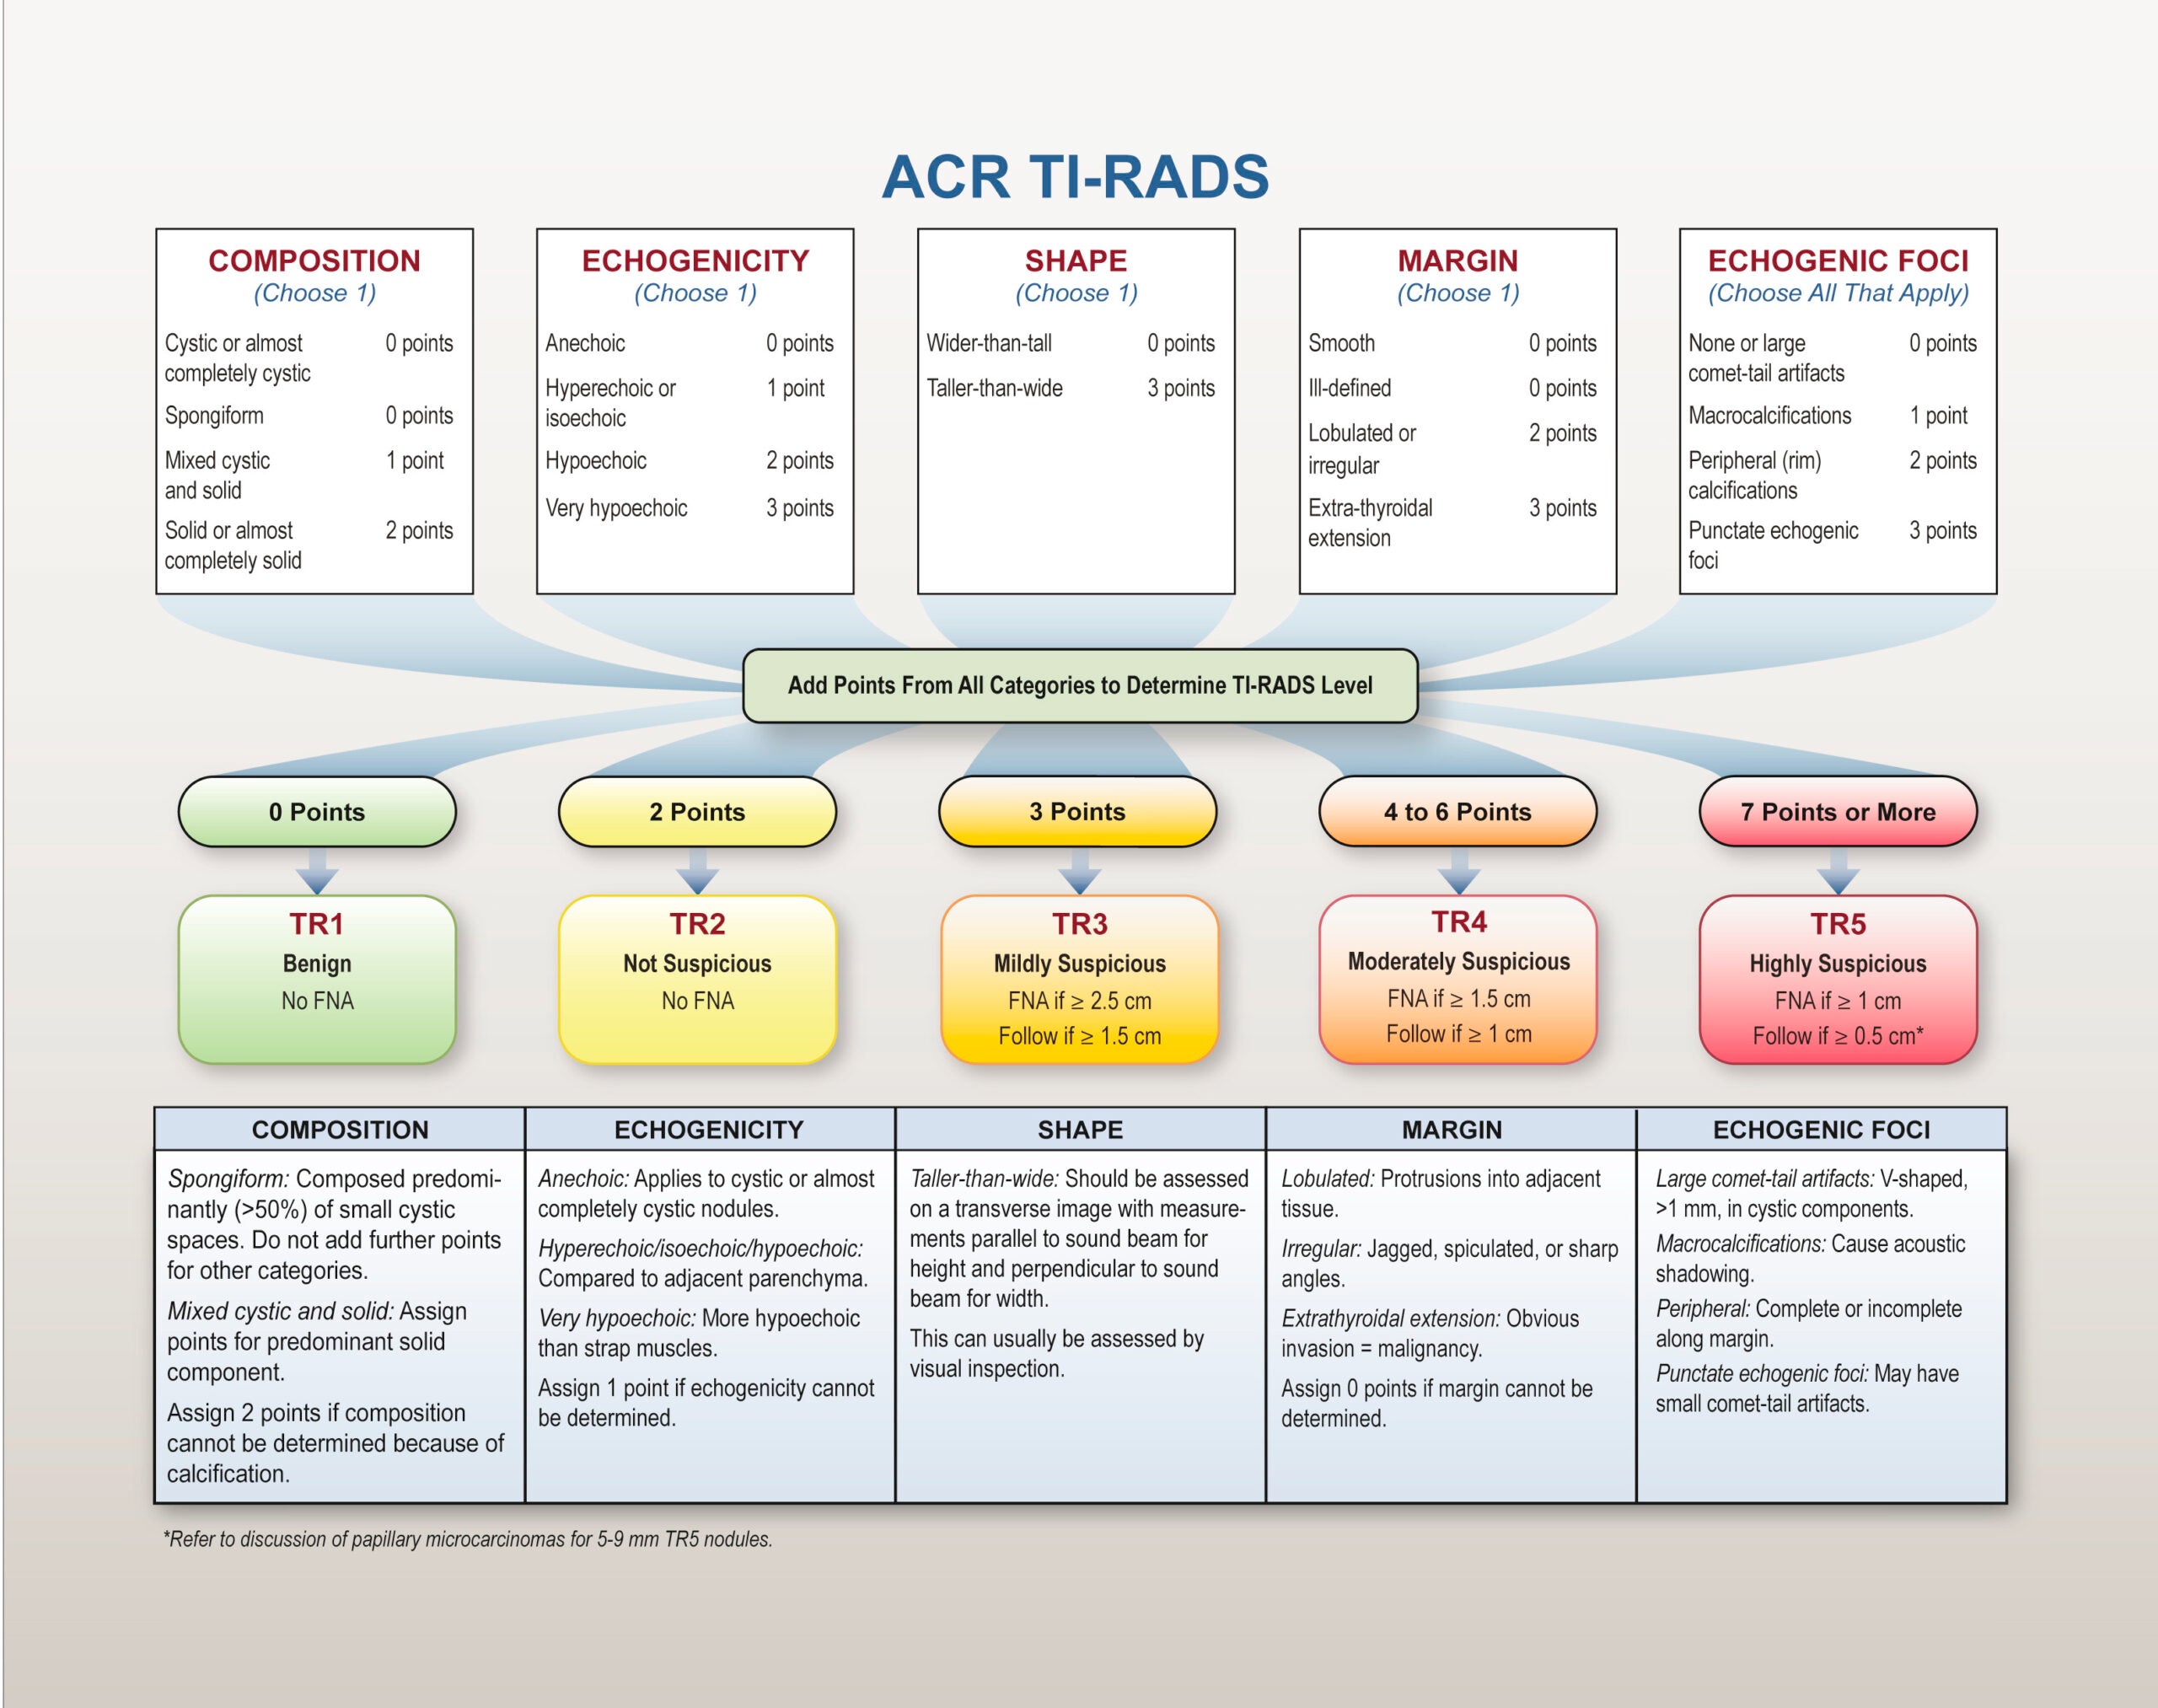 acr-tirads-abdominal-imaging-resources